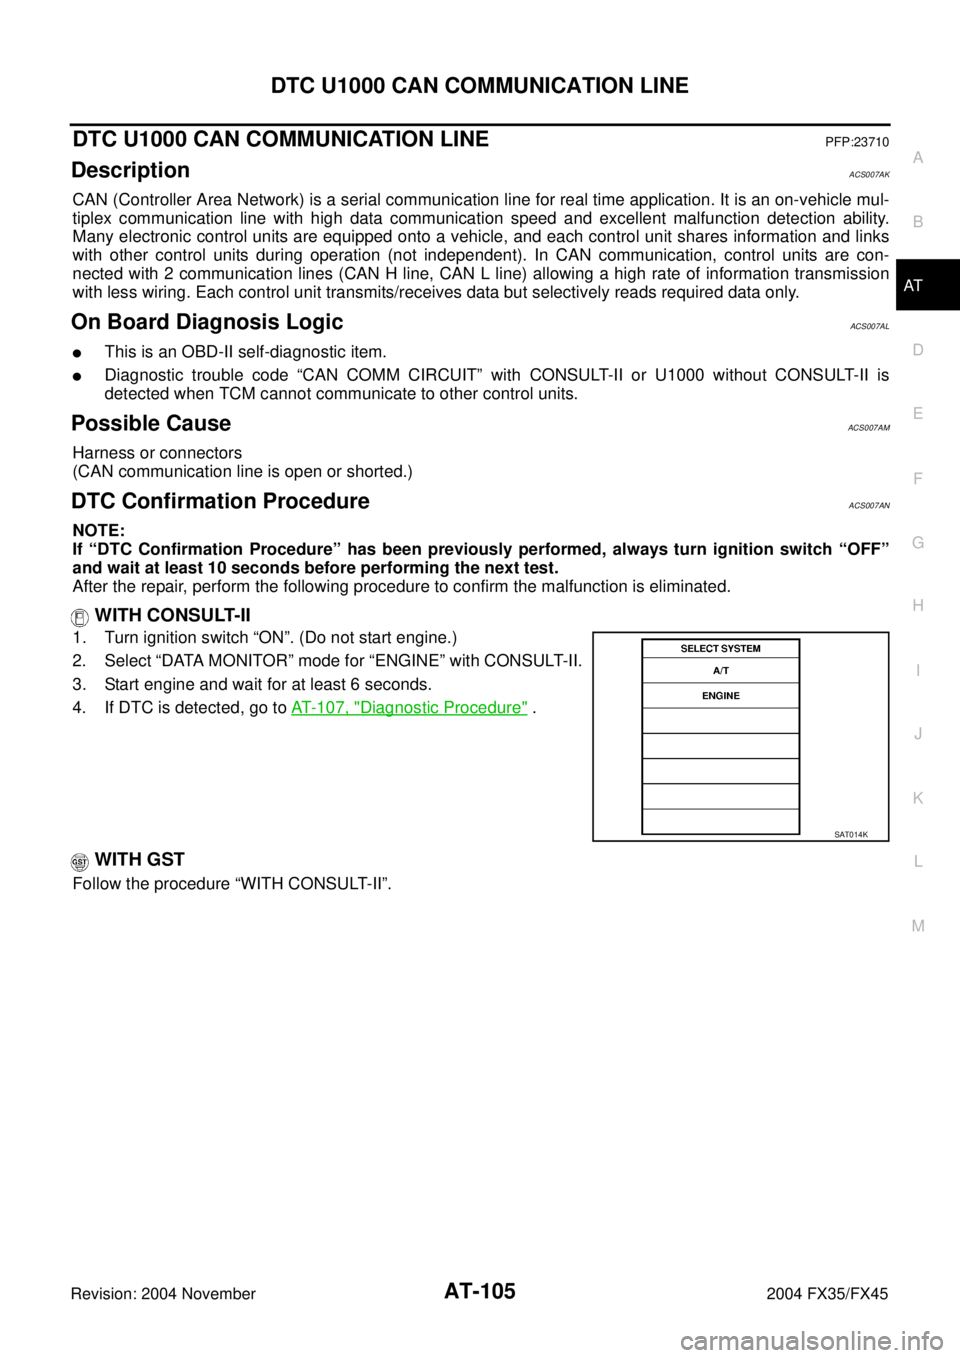 INFINITI FX35 2004  Service Manual DTC U1000 CAN COMMUNICATION LINE
AT-105
D
E
F
G
H
I
J
K
L
MA
B
AT
Revision: 2004 November 2004 FX35/FX45
DTC U1000 CAN COMMUNICATION LINEPFP:23710
DescriptionACS007AK
CAN (Controller Area Network) is 